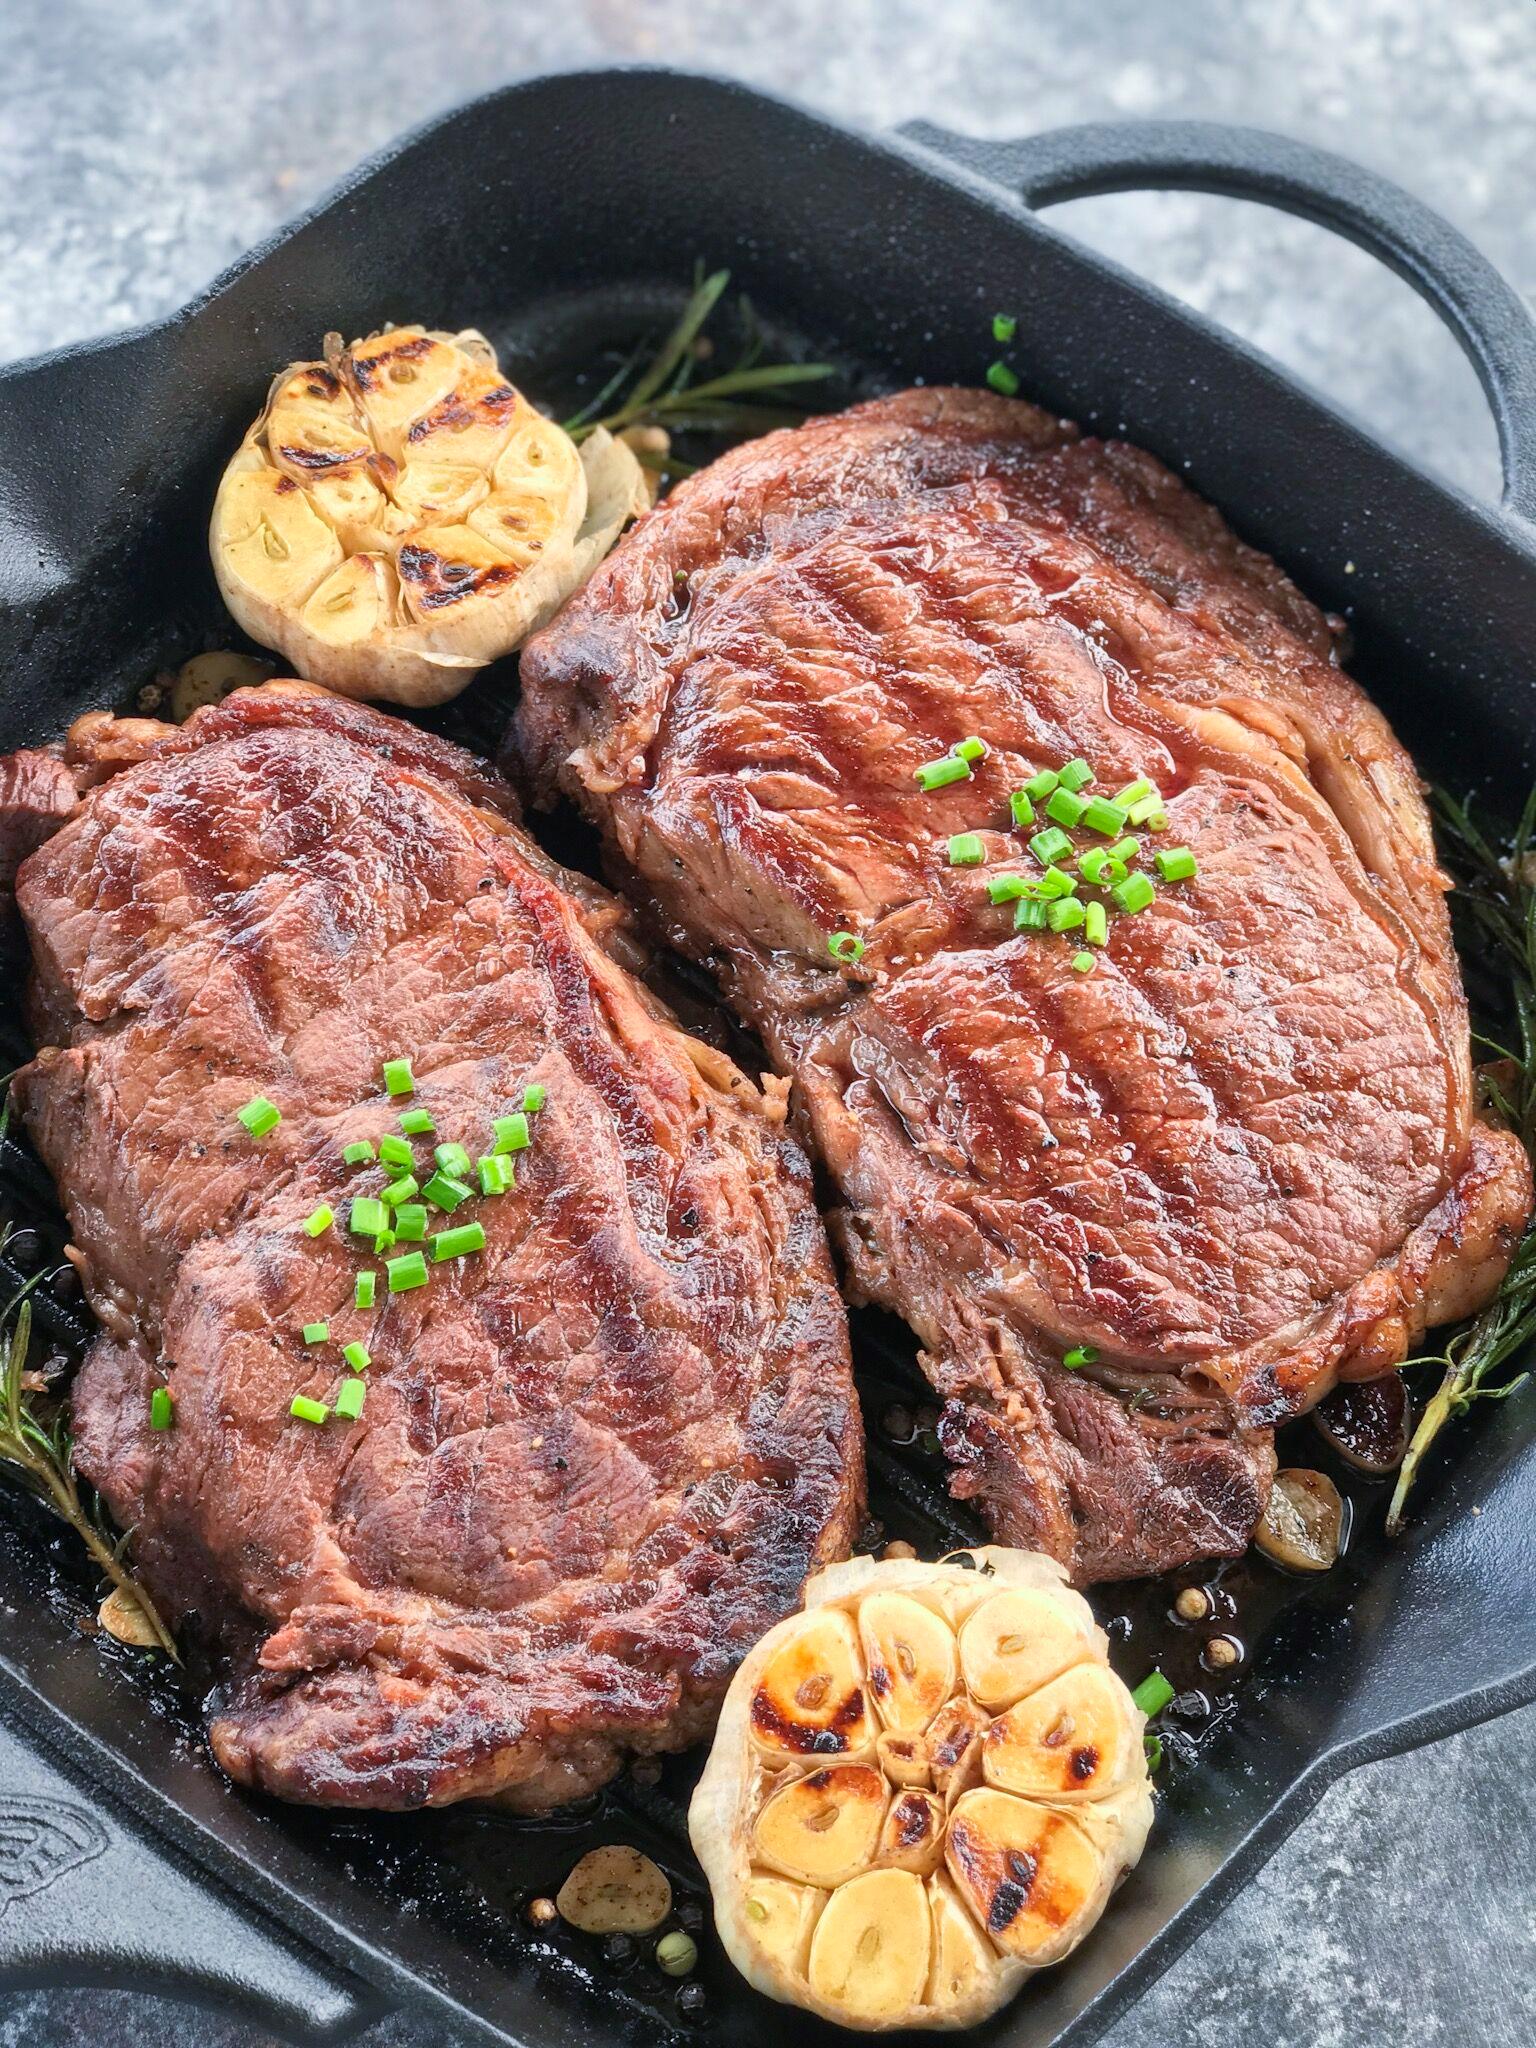 https://www.cookinwithmima.com/wp-content/uploads/2018/12/Simple-Skillet-Ribeye-Steak-1.jpg